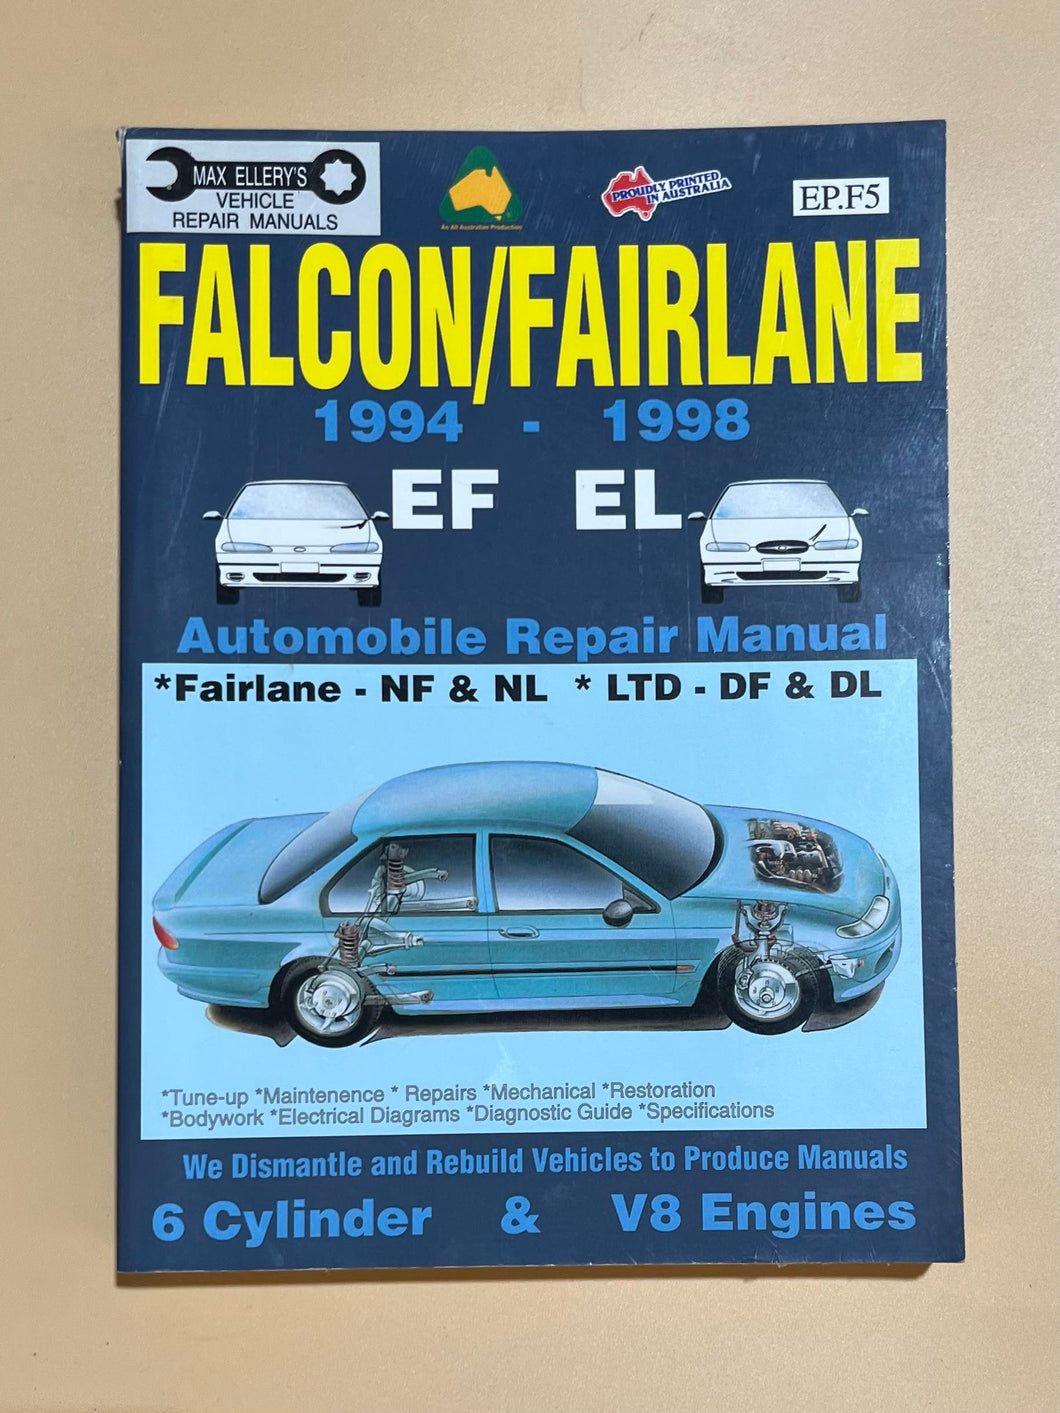 Falcon/Fairlane 1994-1998 EF EL Automobile Repair Manual